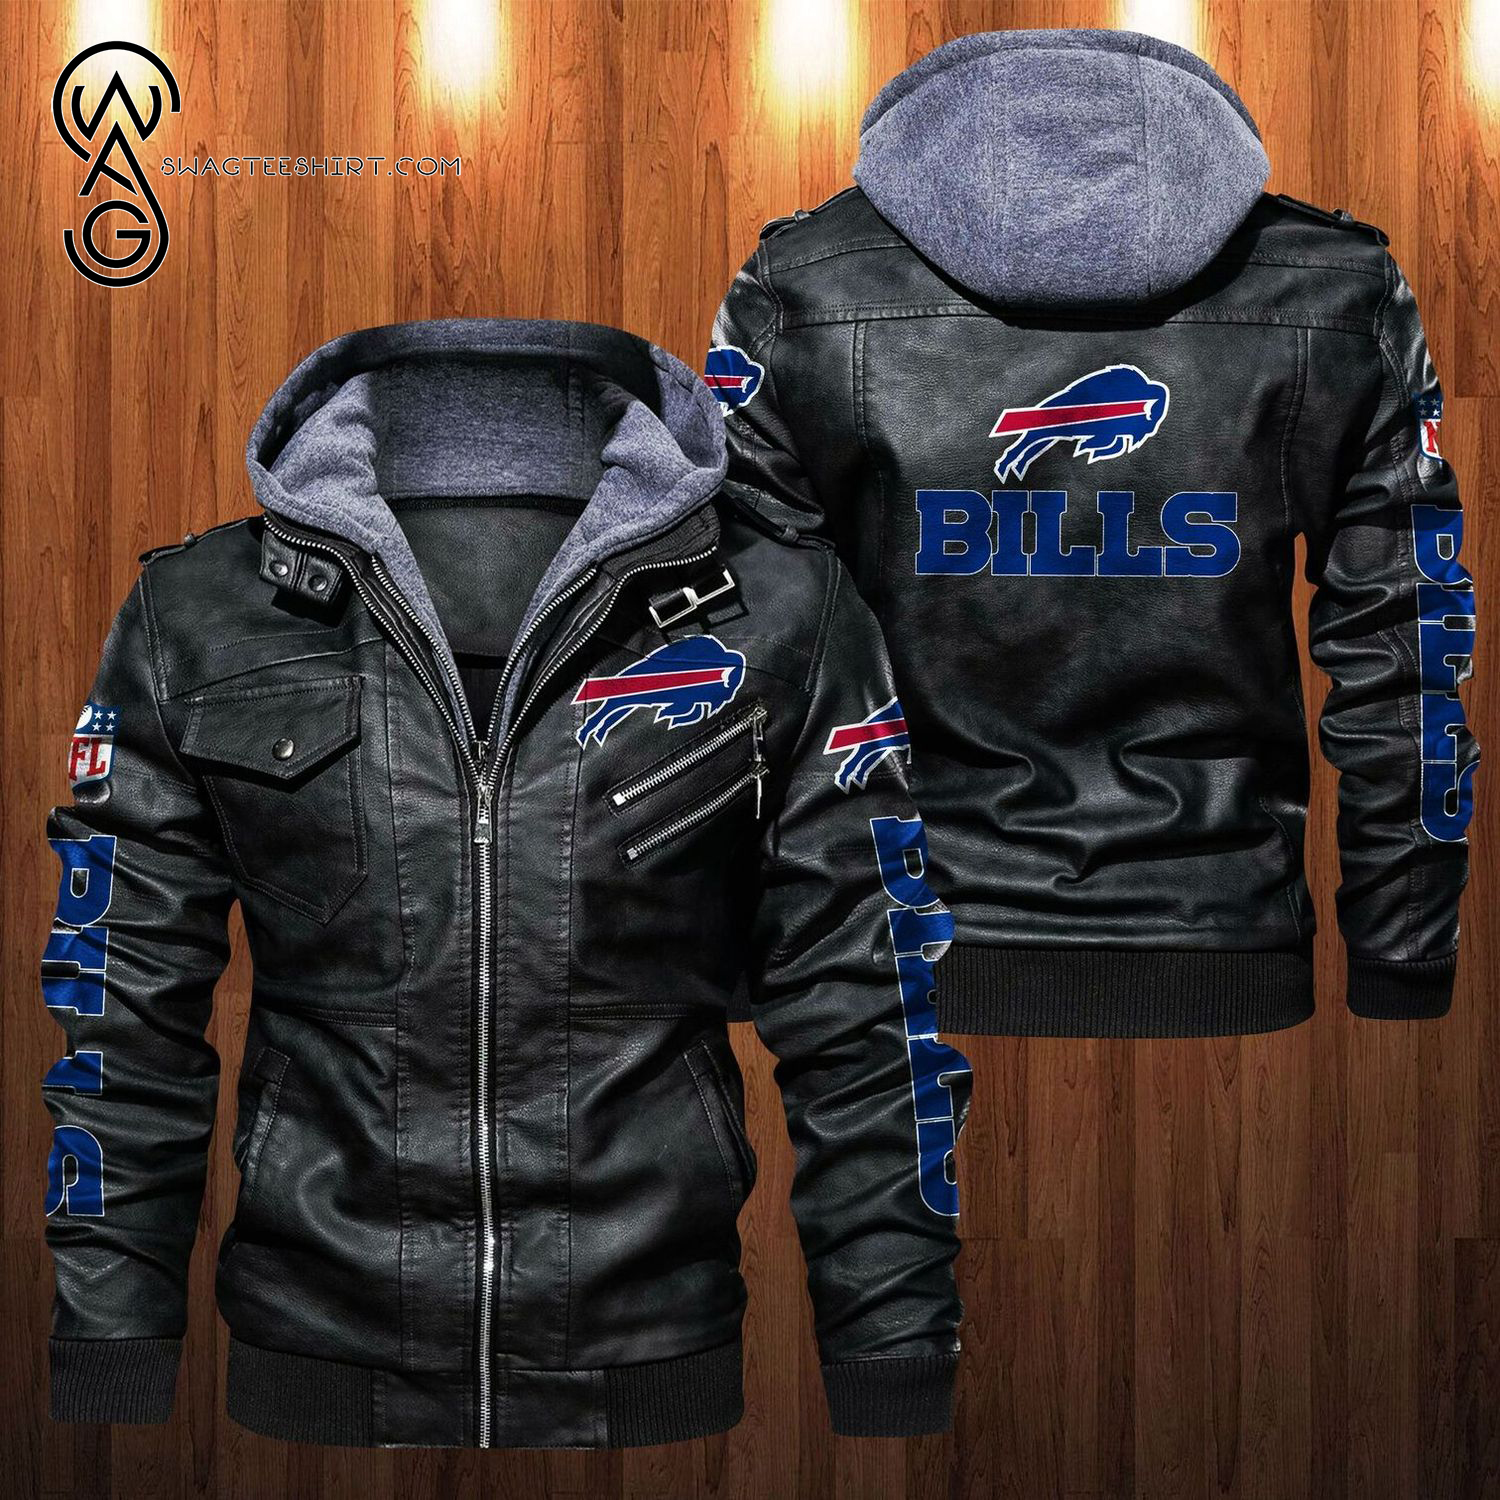 NFL Buffalo Bills Team Leather Jacket